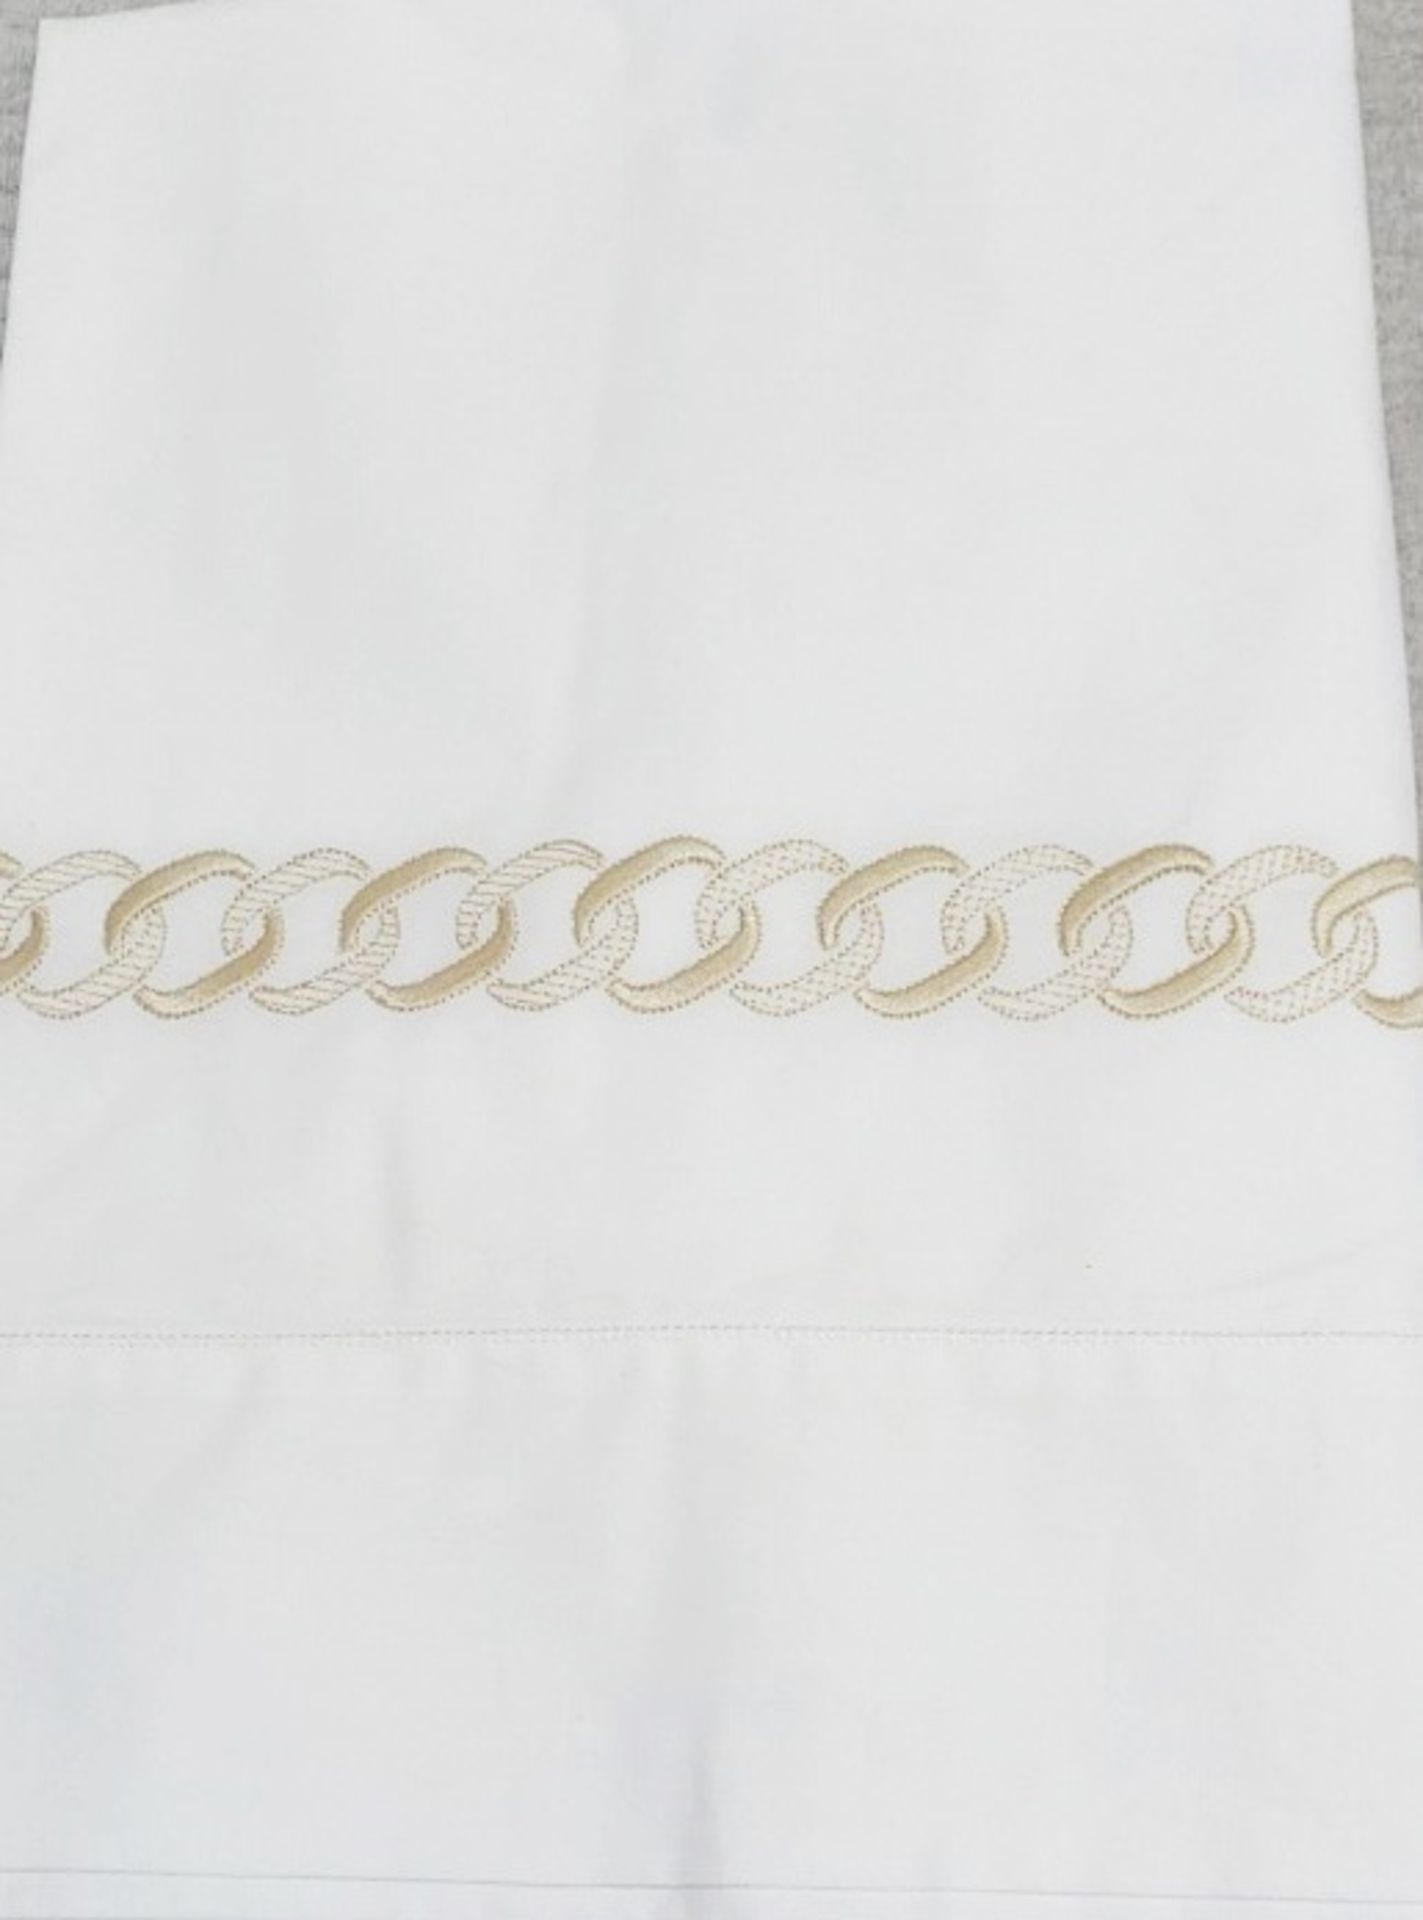 1 x PRATESI Gold Chain Embroidered Pillow Sham 50x75cm - Original Price £245.00 - Image 3 of 4